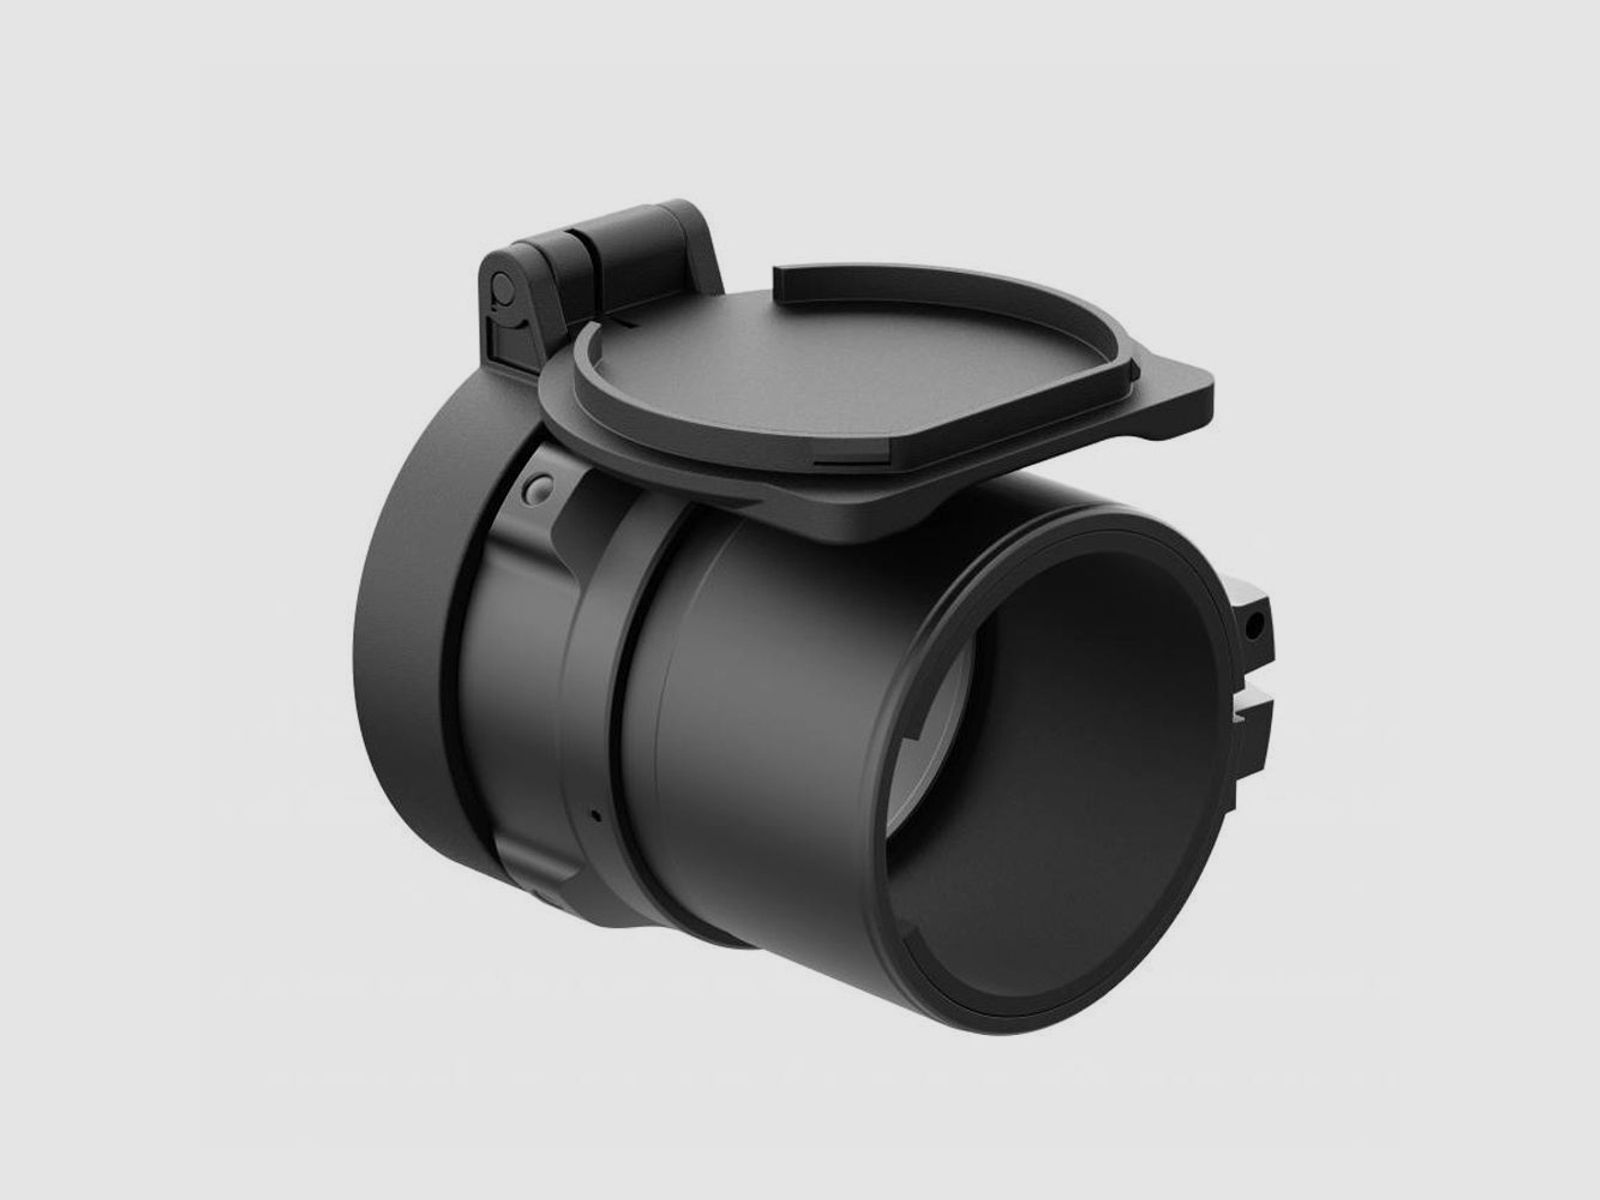 Pulsar DN 50 mm Cover Ring Adapter für Core FXQ Geräte